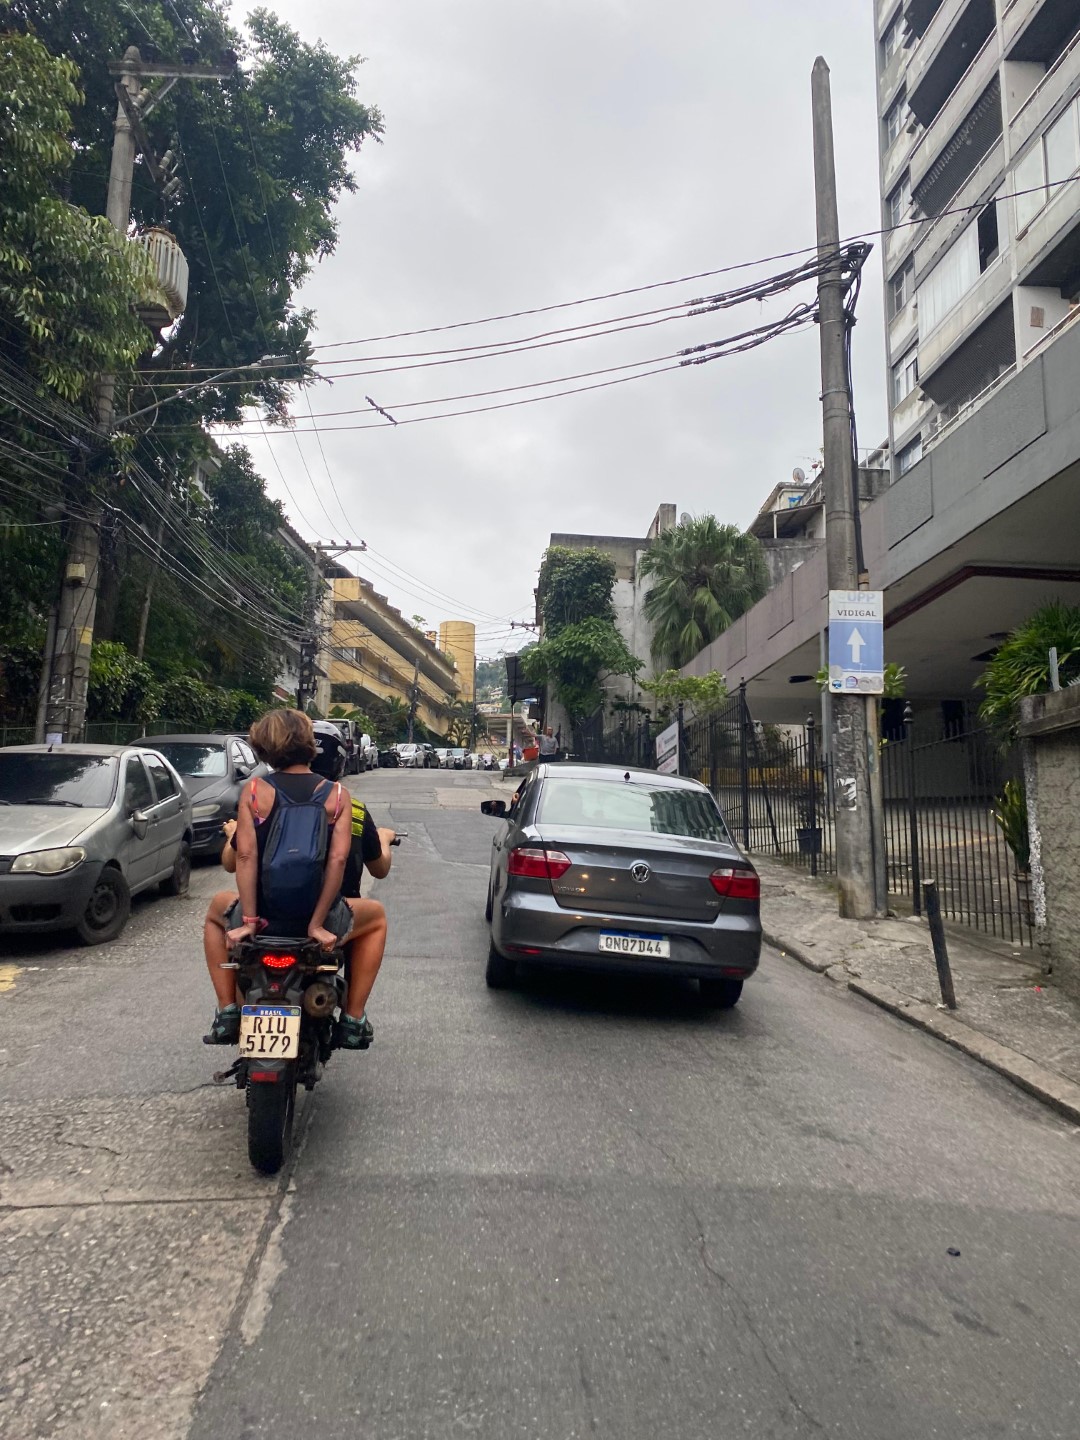 The moto-taxi ride up to the Vigidal favela